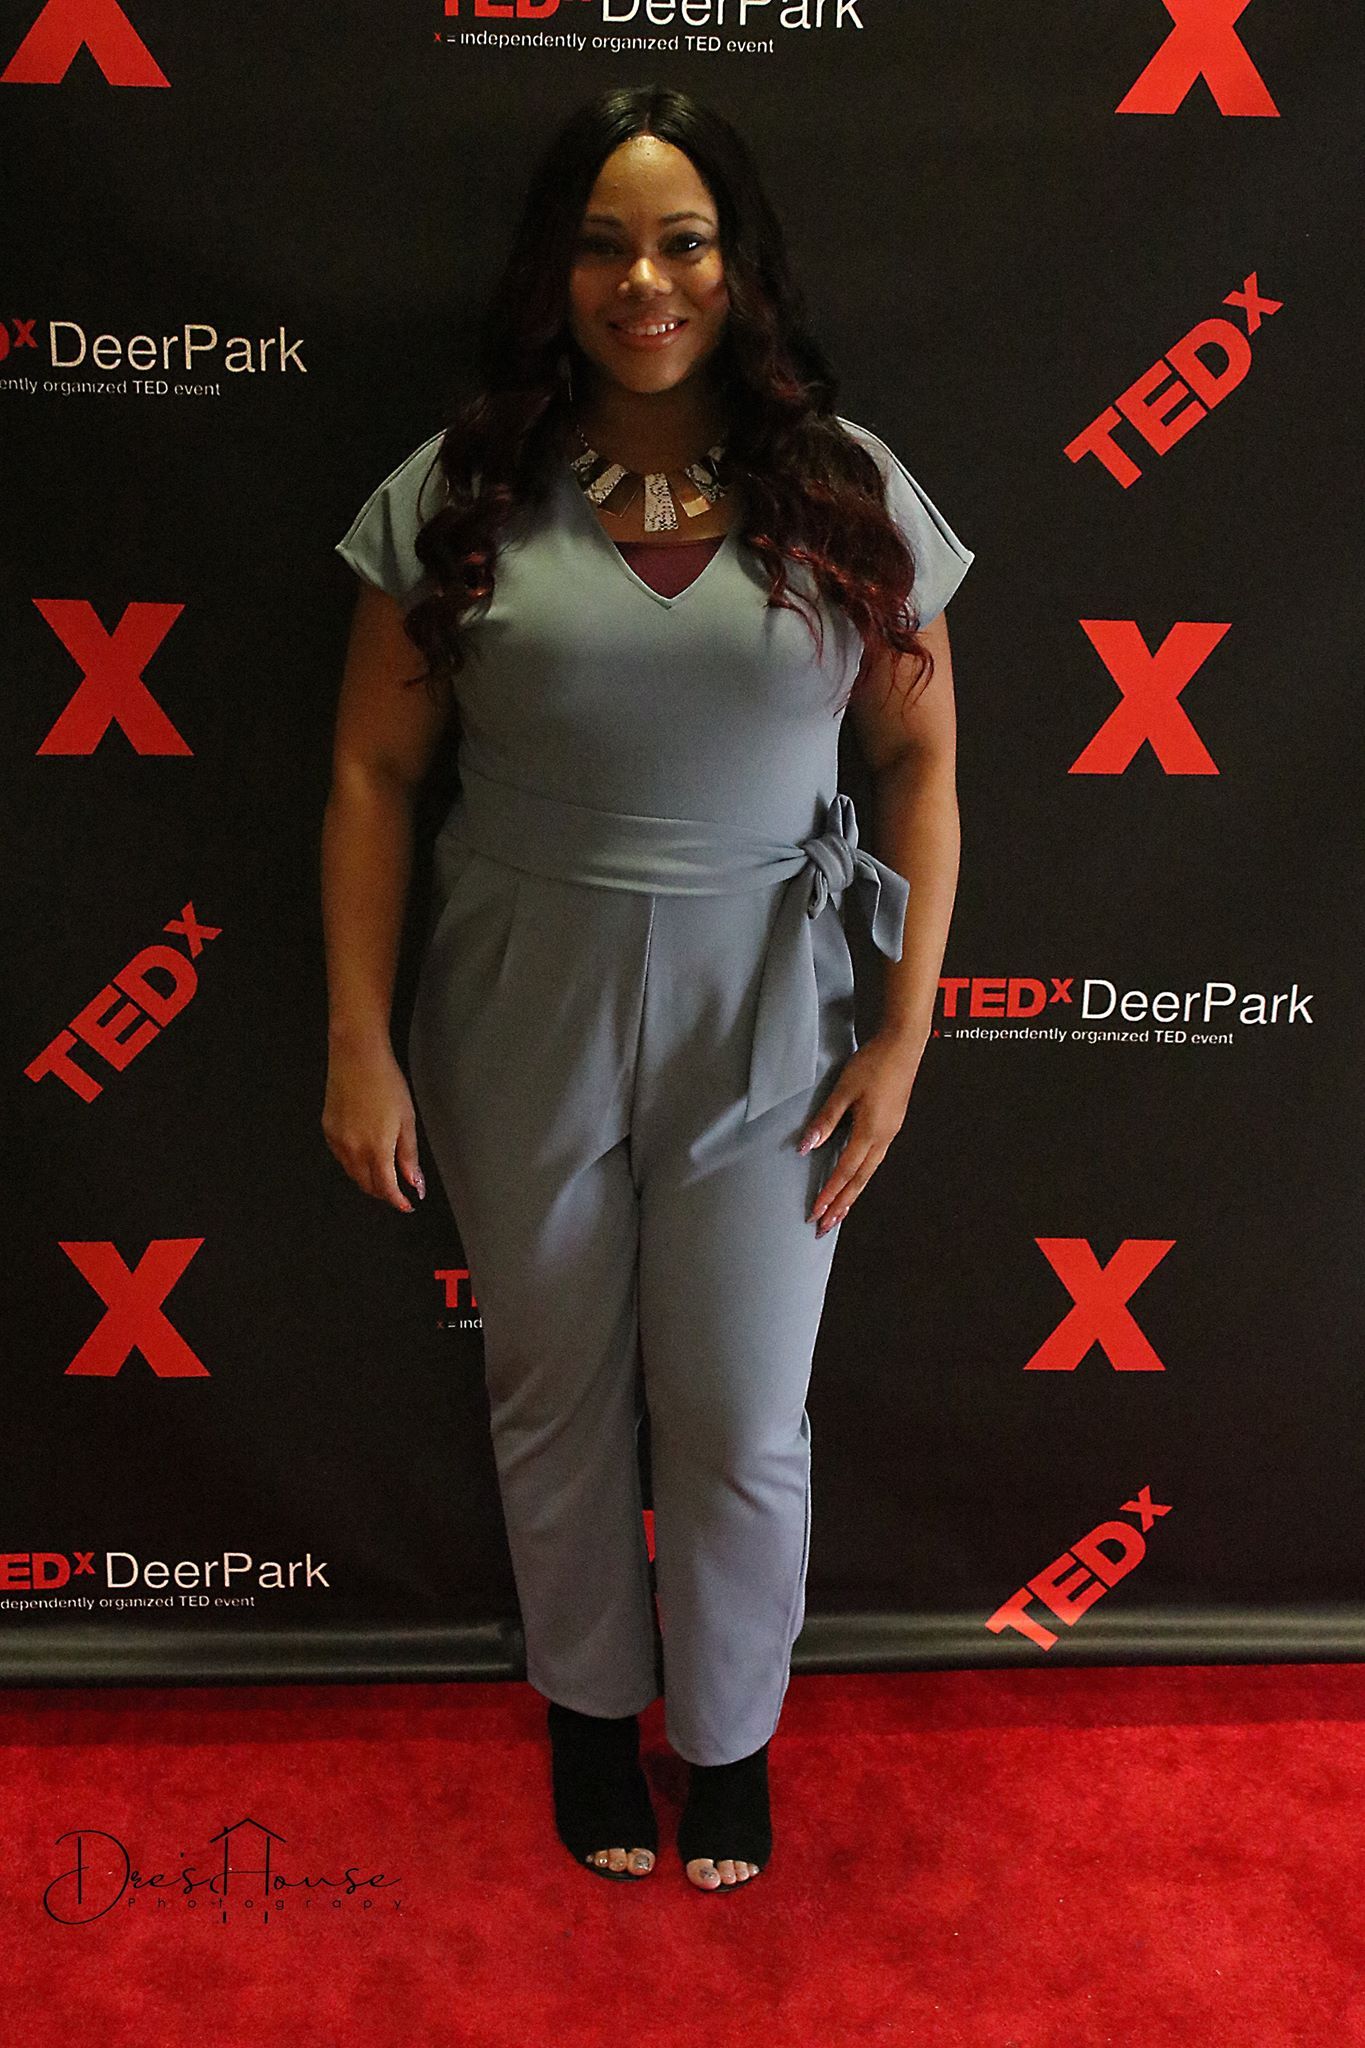 Sam Law TEDX DEER PARK